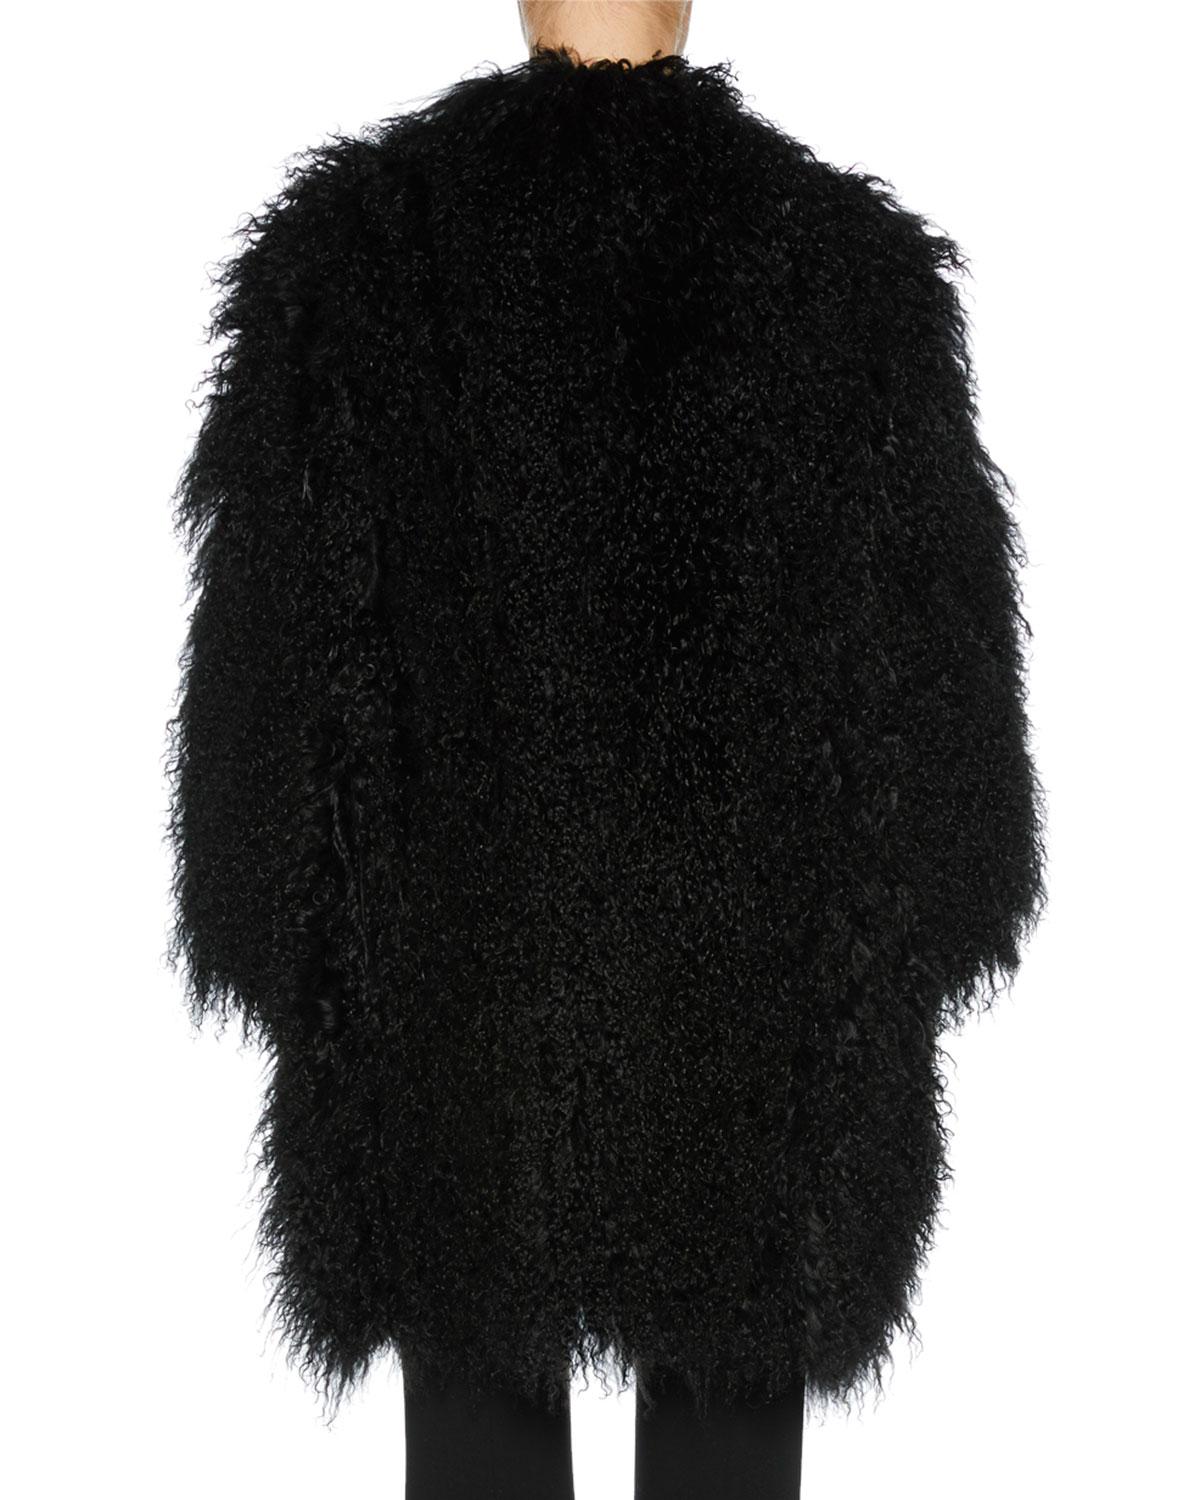 Giorgio Armani Mongolian Lamb Fur Coat in Black - Lyst